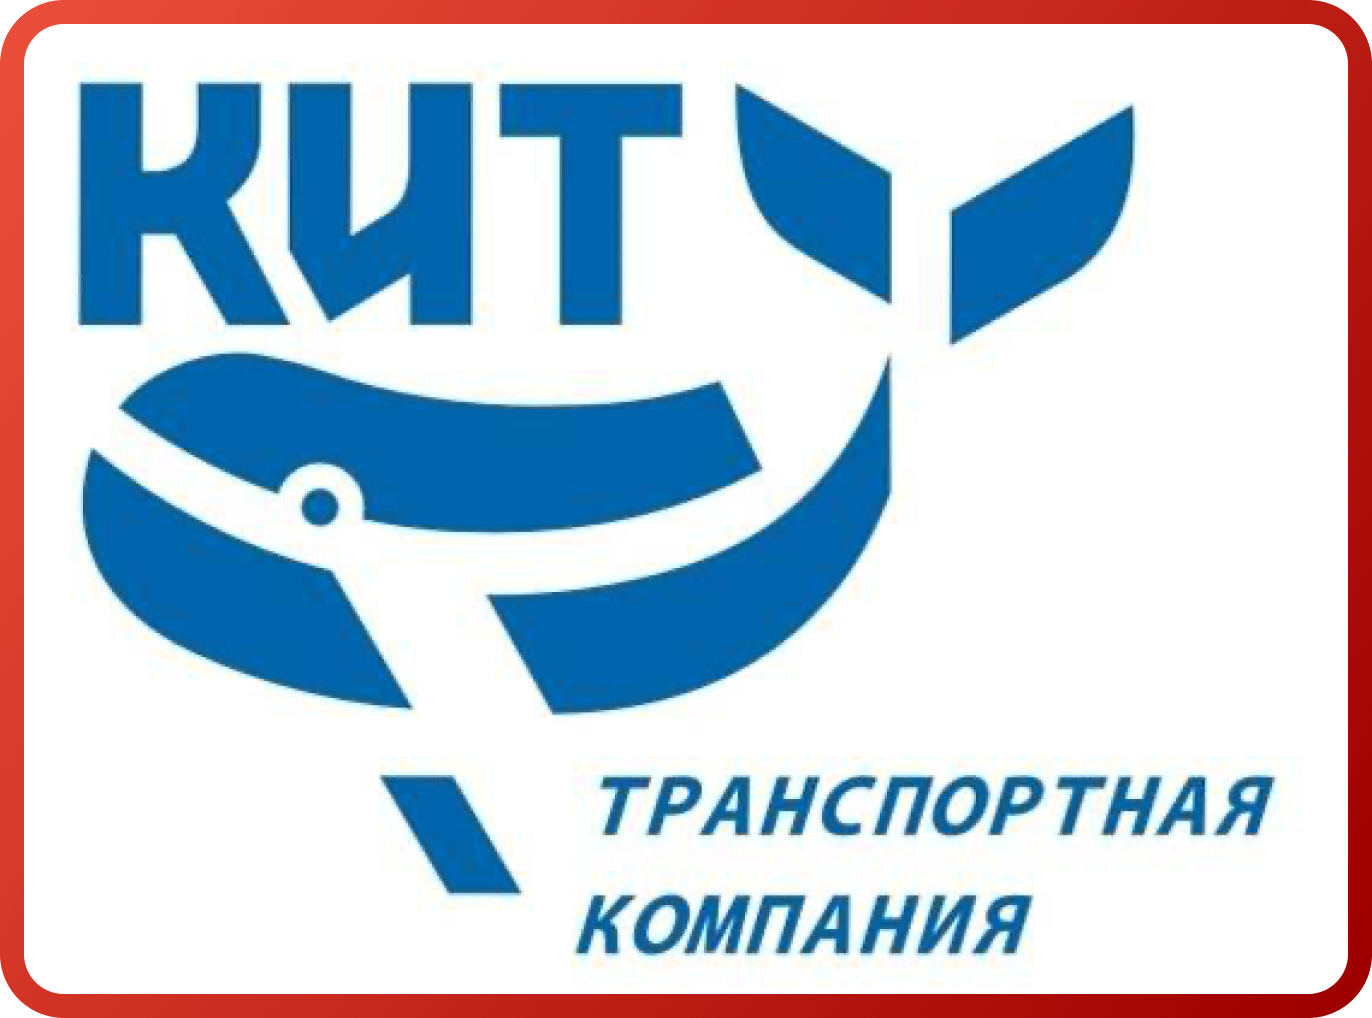 Кит иркутск транспортная. Транспортная компания кит лого. ТК кит логотип. Кит транспорт компании. Кит логотип кит транспортная компания.